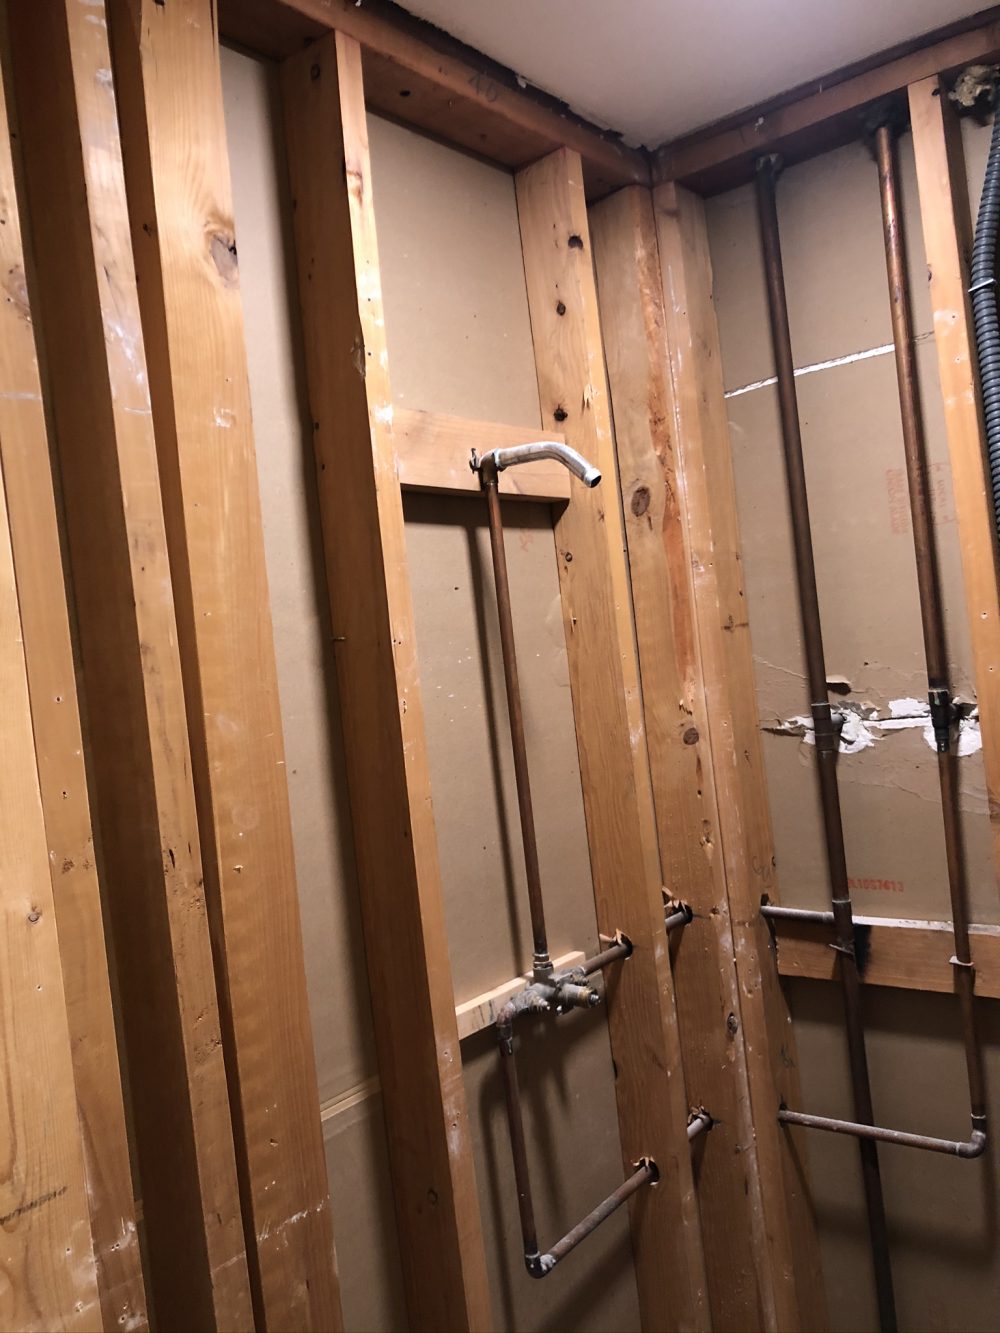 Shower Renovation